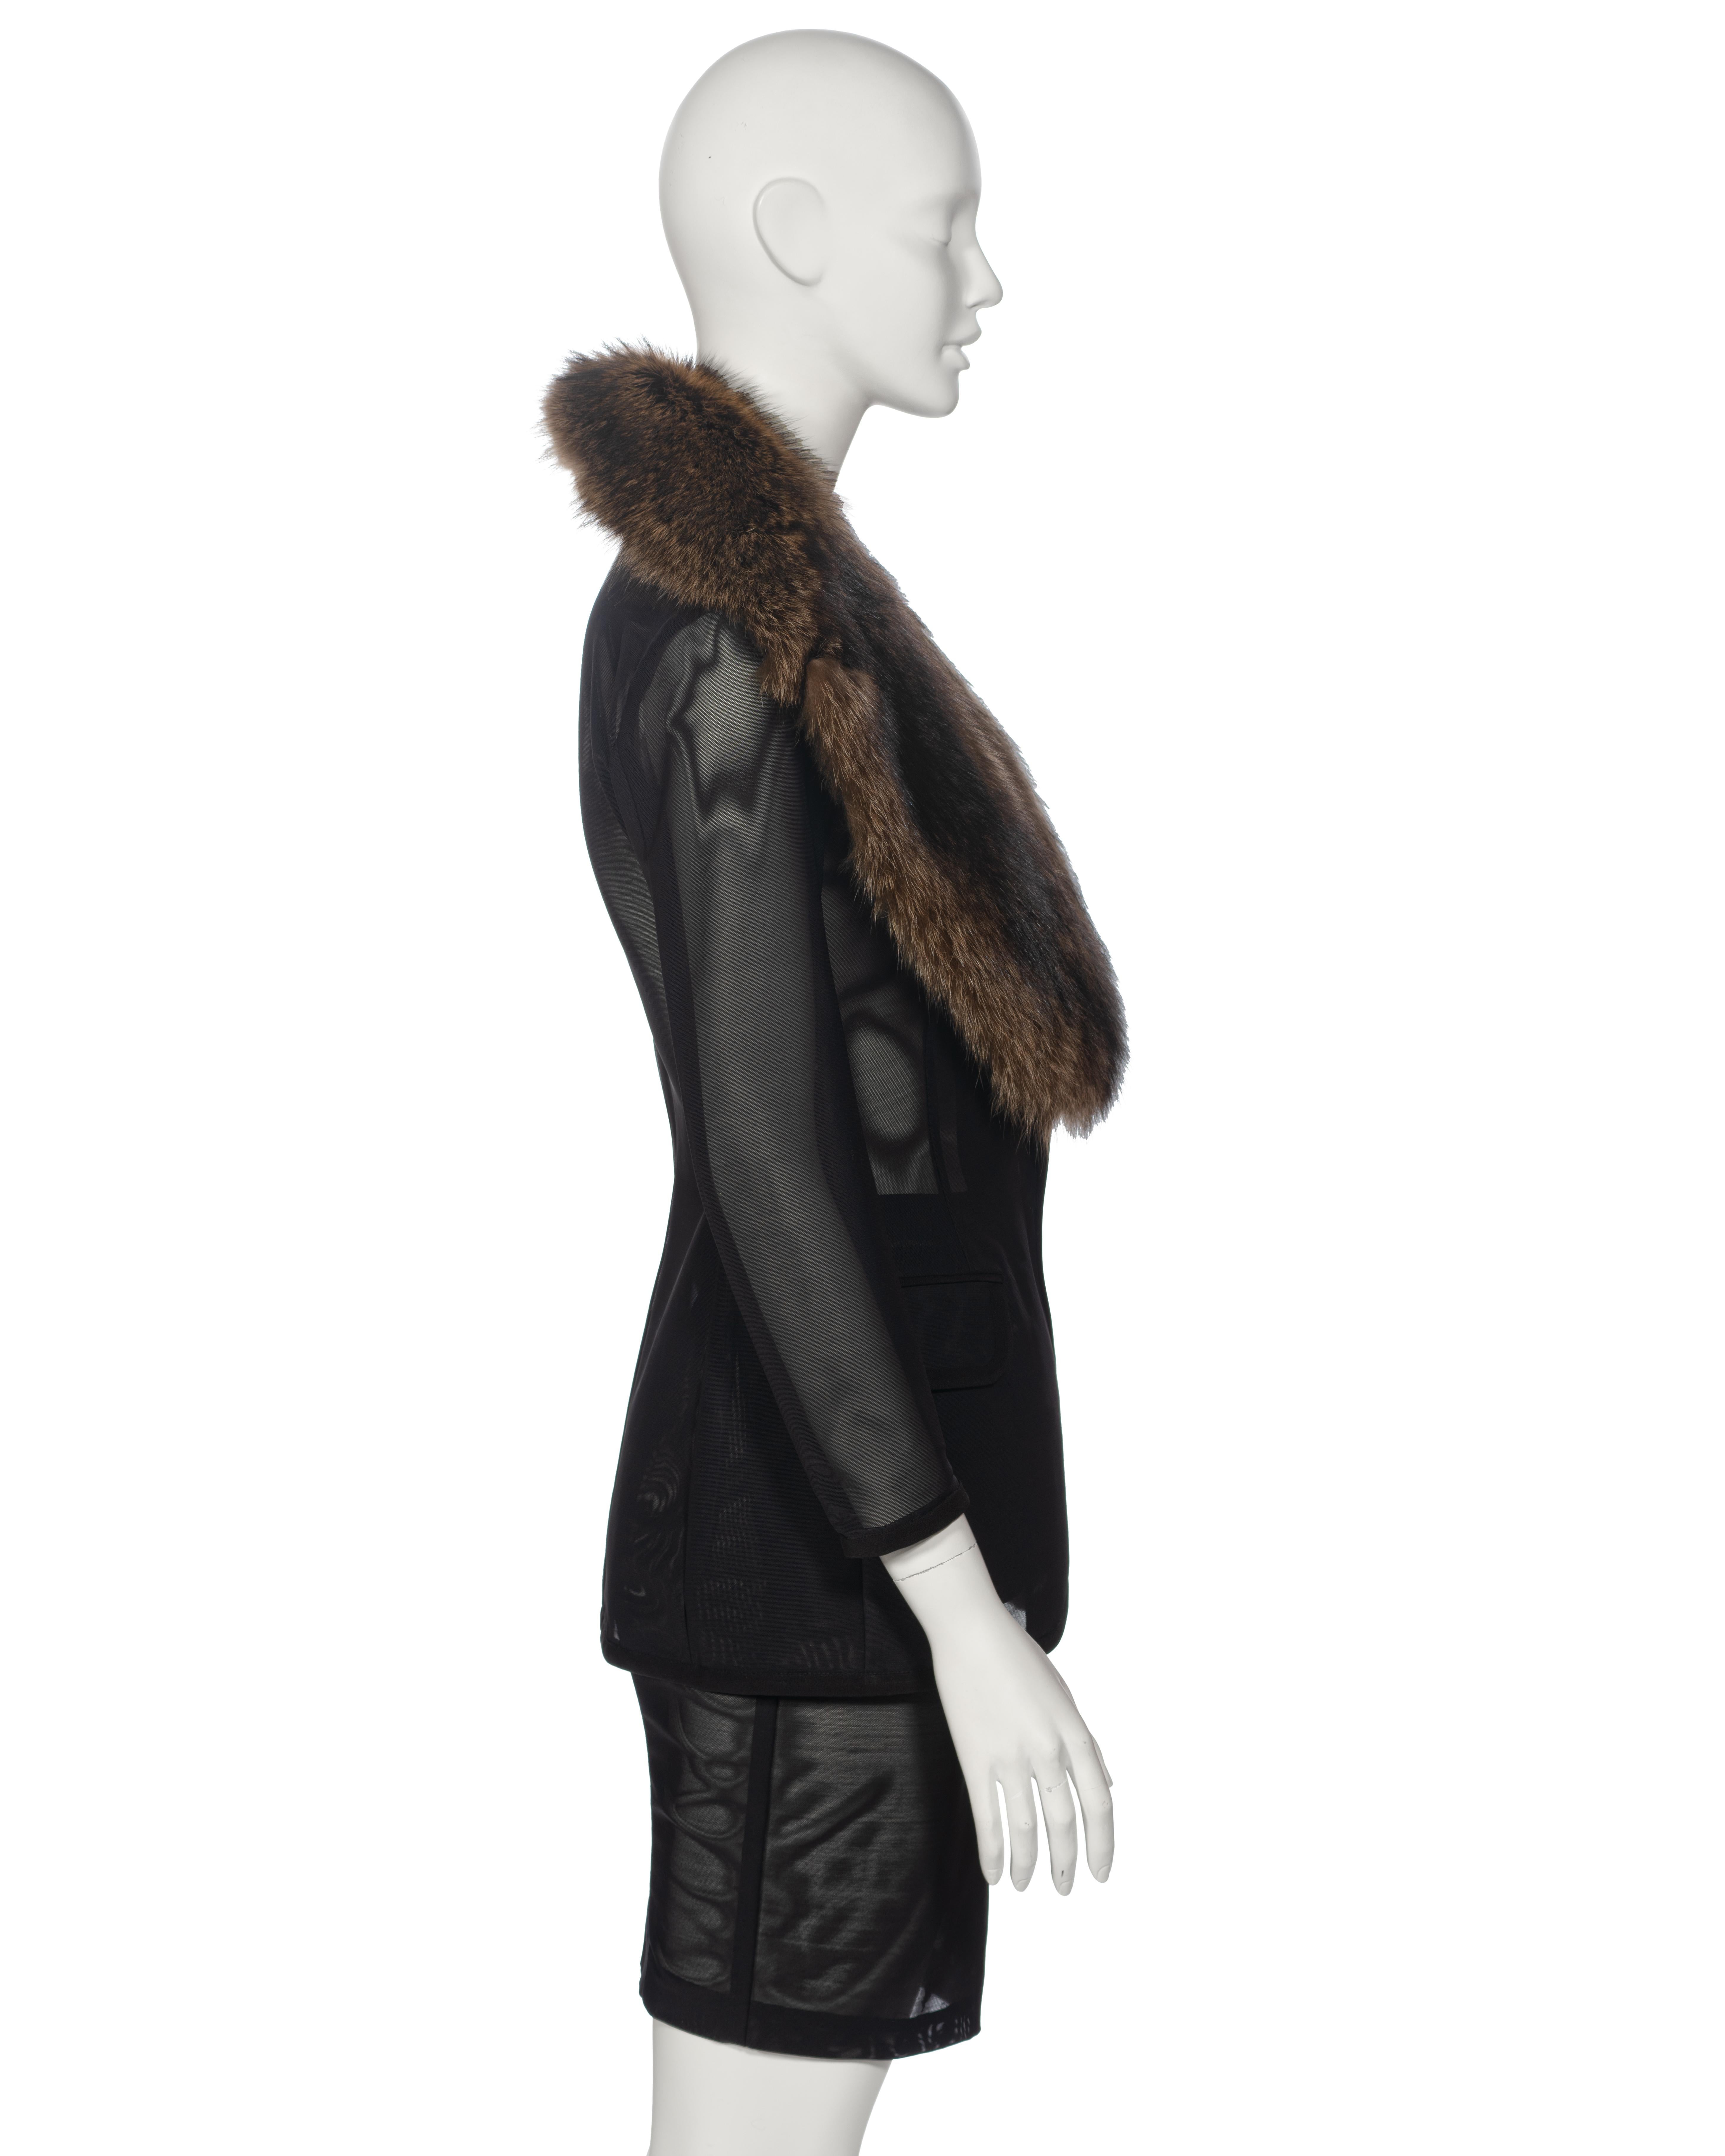 Dolce & Gabbana Black Power Net Skirt Suit with Fur Collar, fw 1995 5